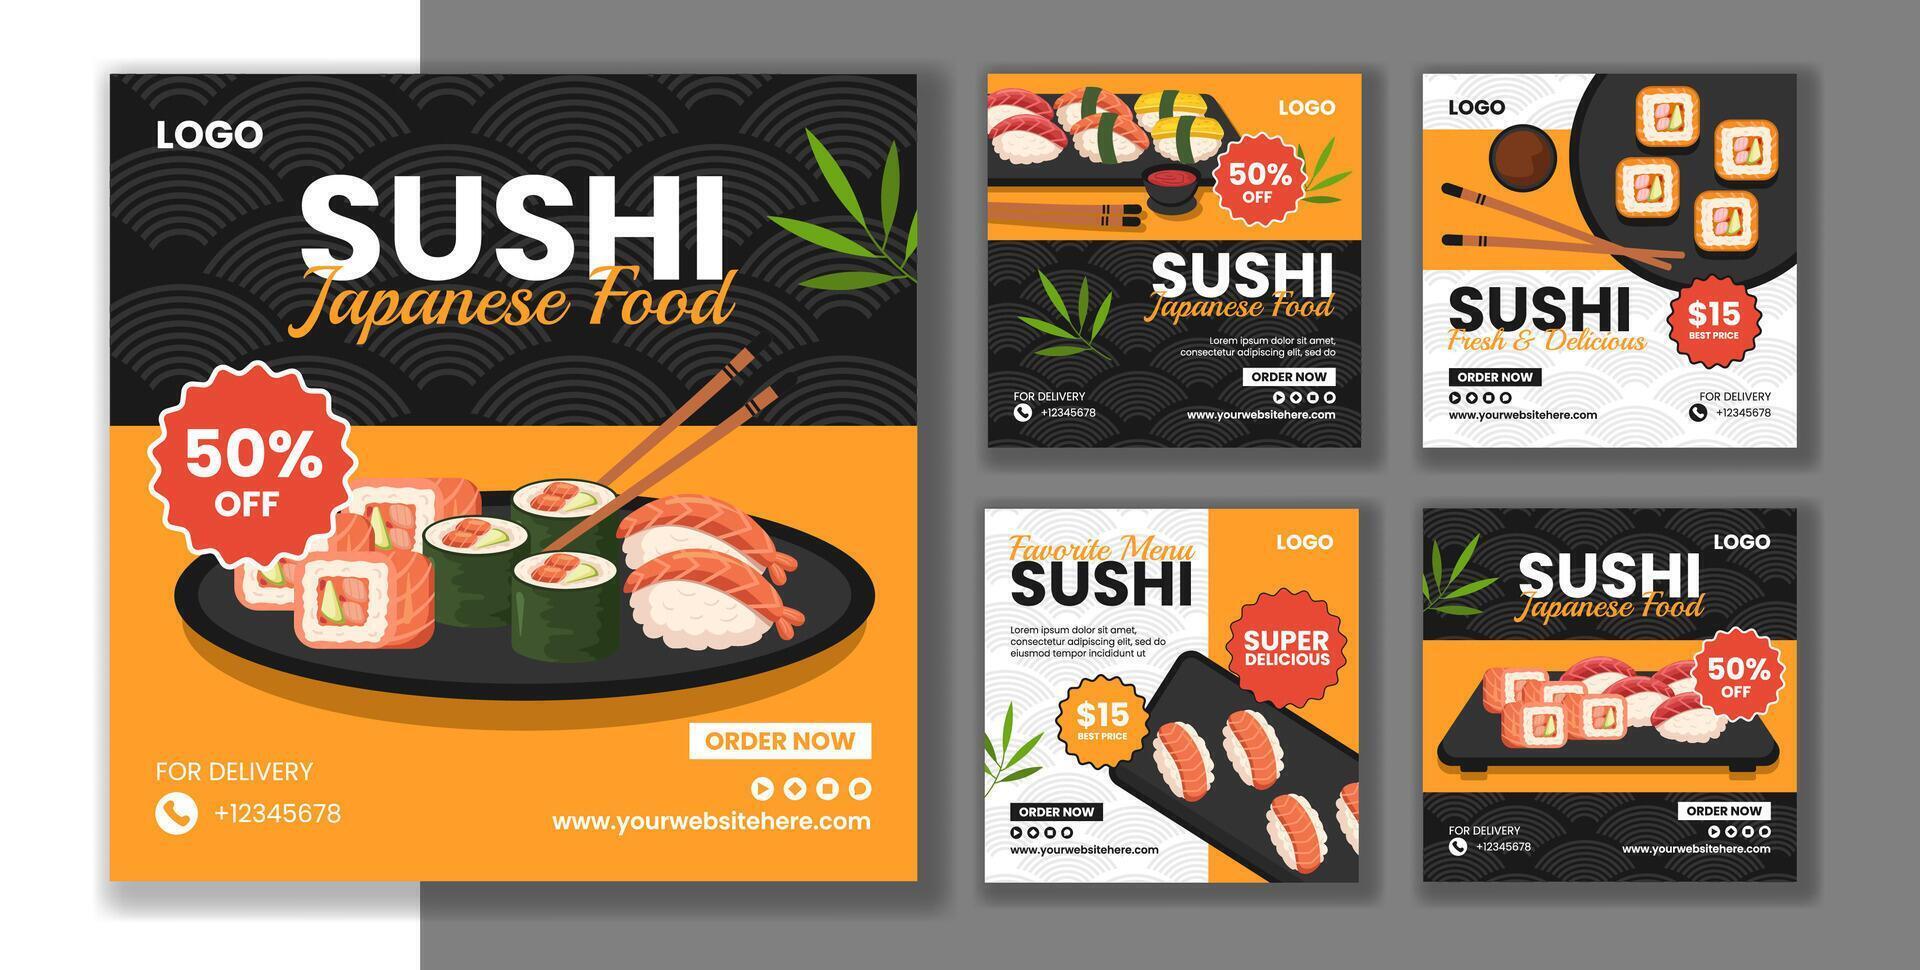 Sushi Japanese Food Social Media Post Flat Cartoon Hand Drawn Templates Background Illustration vector